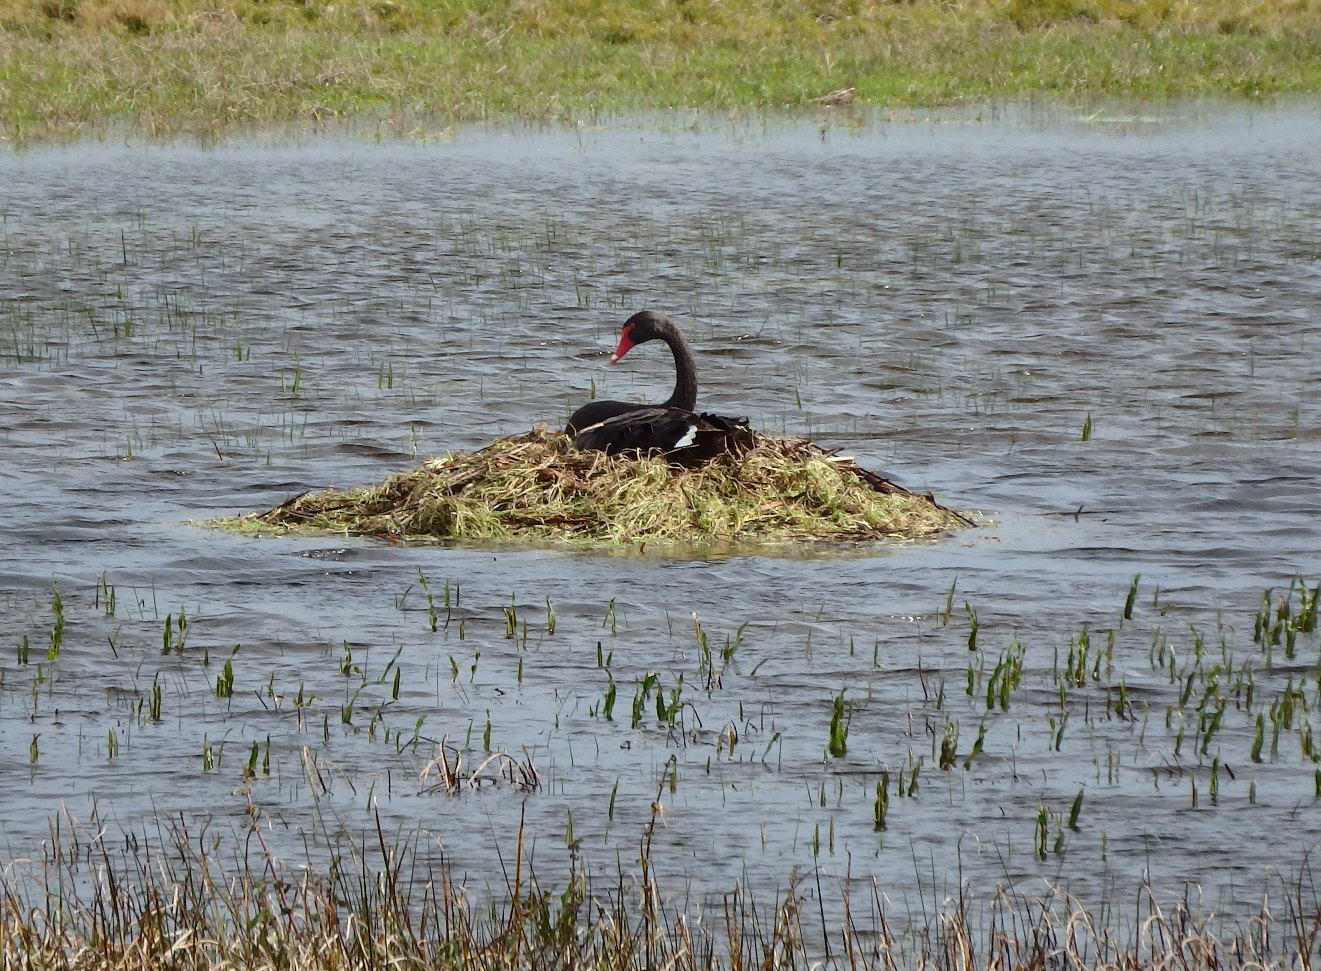 Black Swan nesting. Photo by Robert Thompson